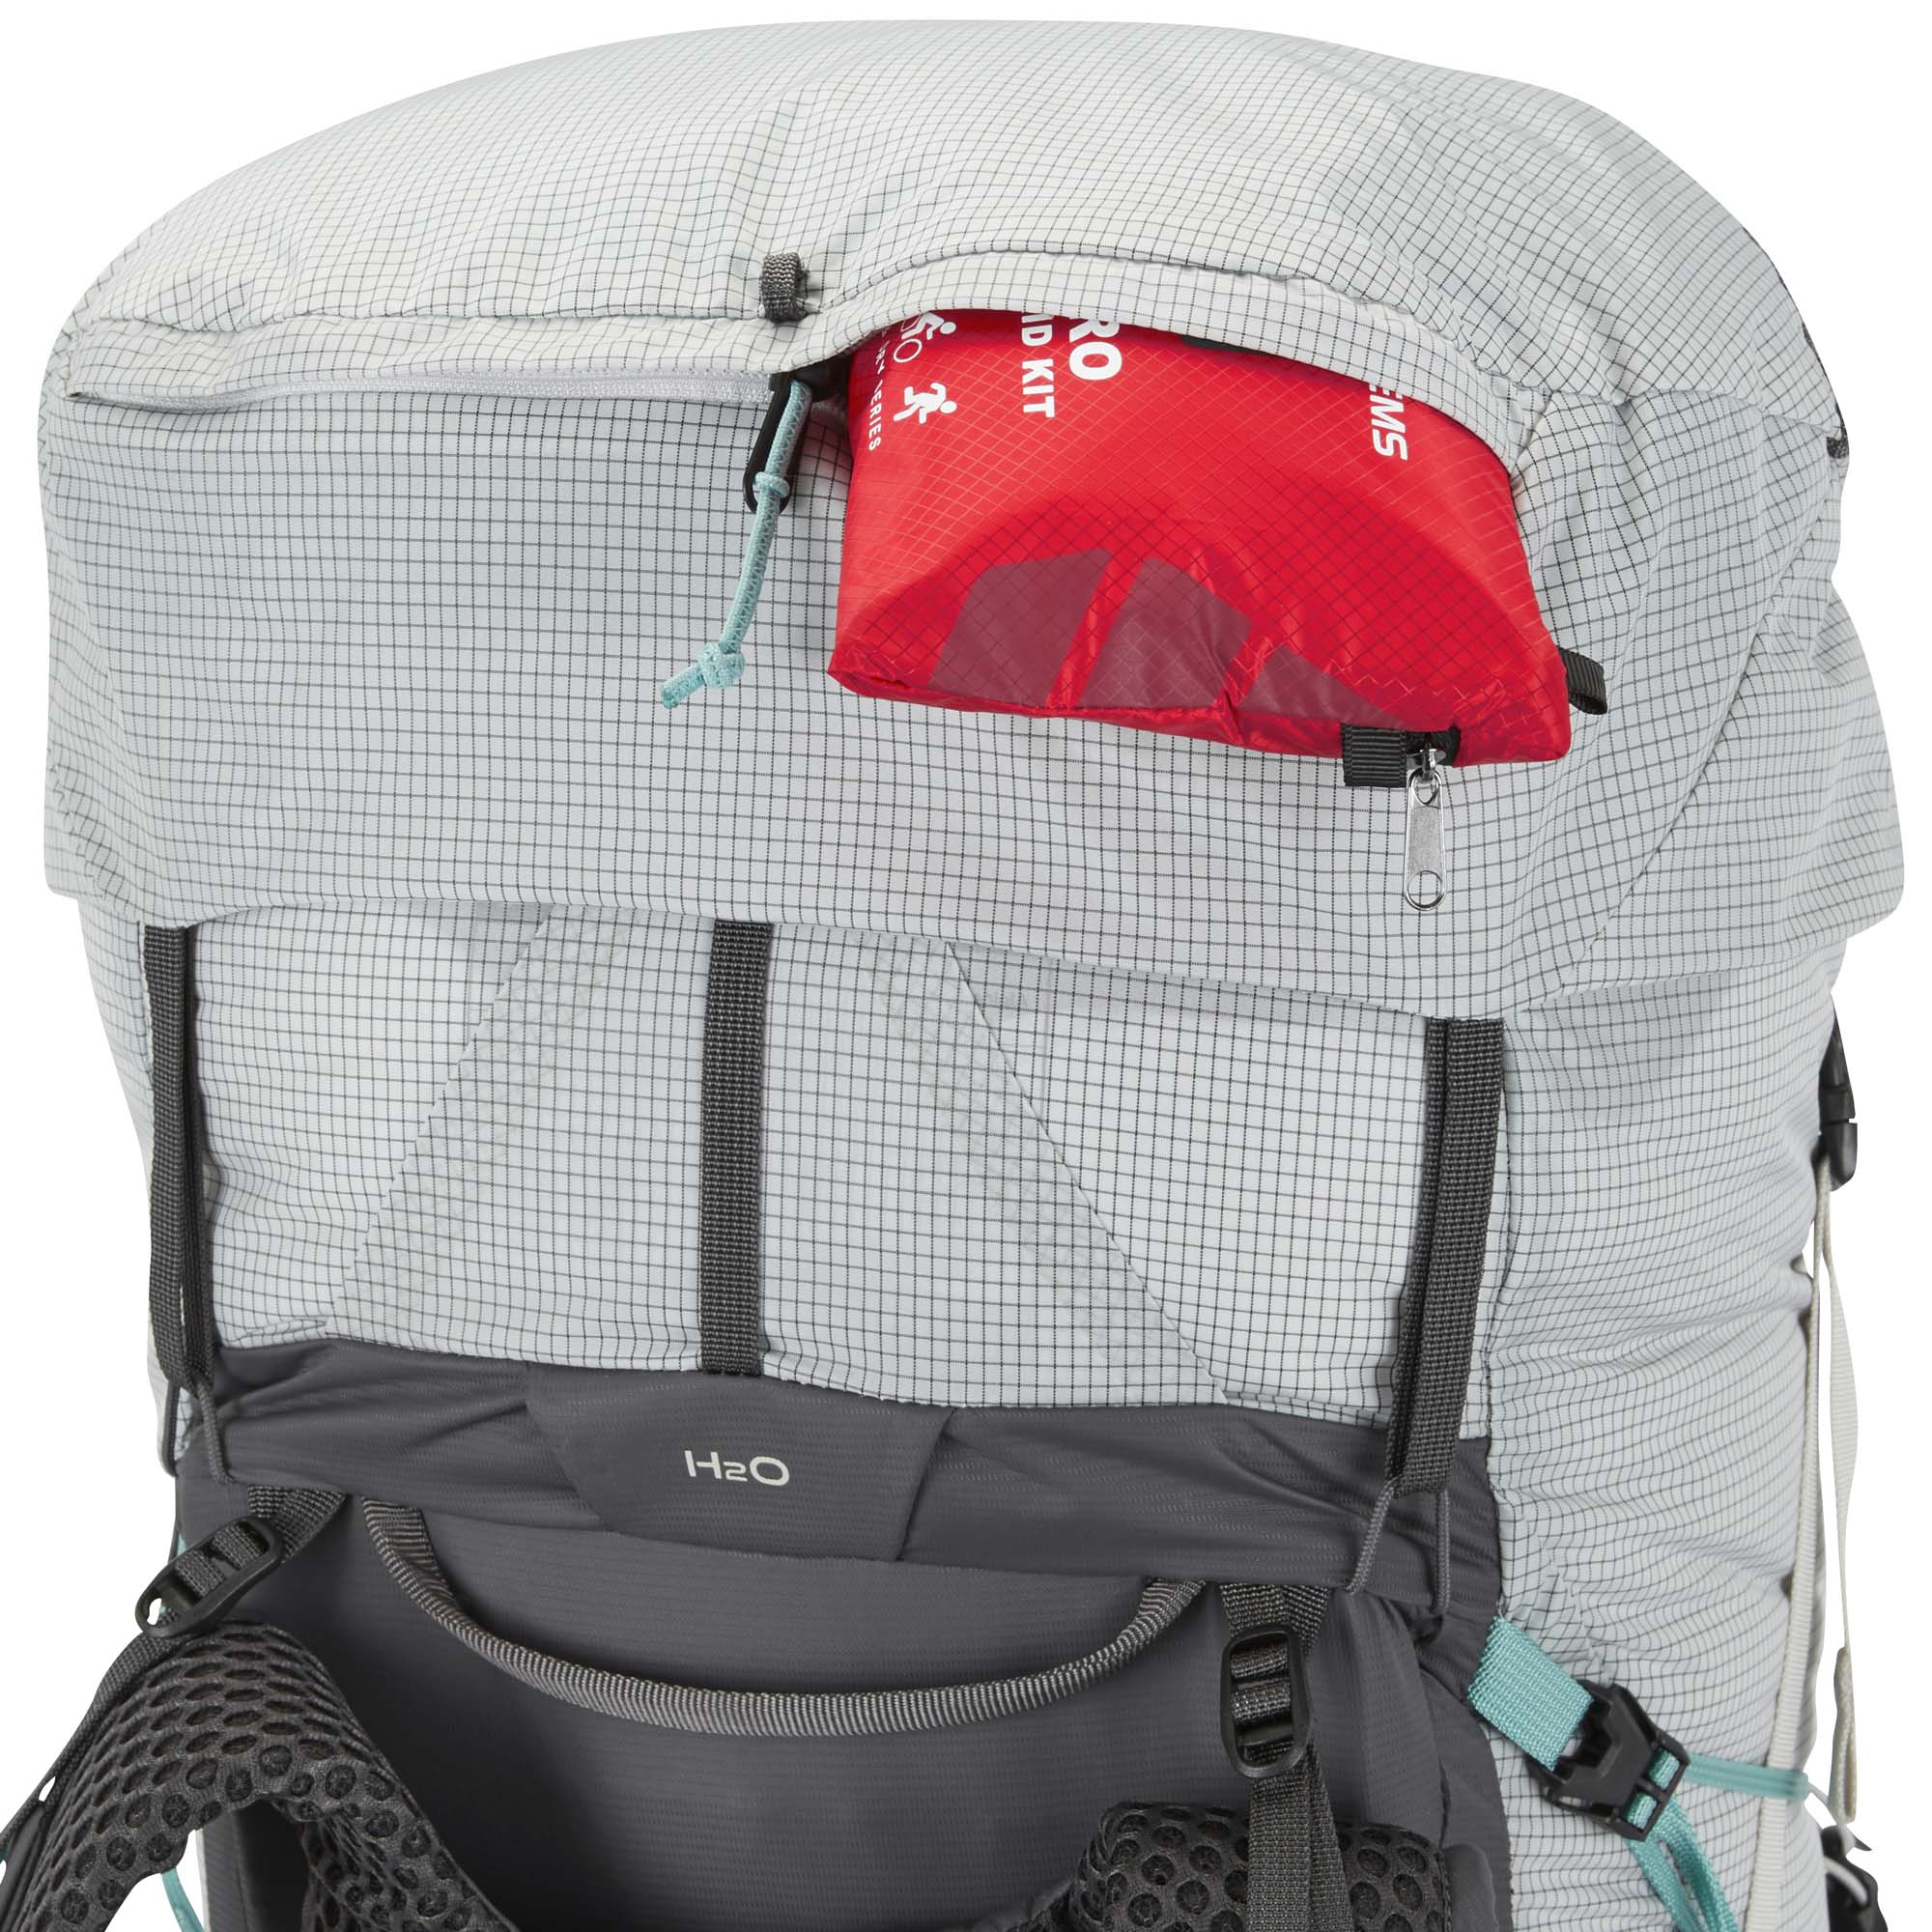 Rab Muon ND 50 Women's Technical Trekking Backpack